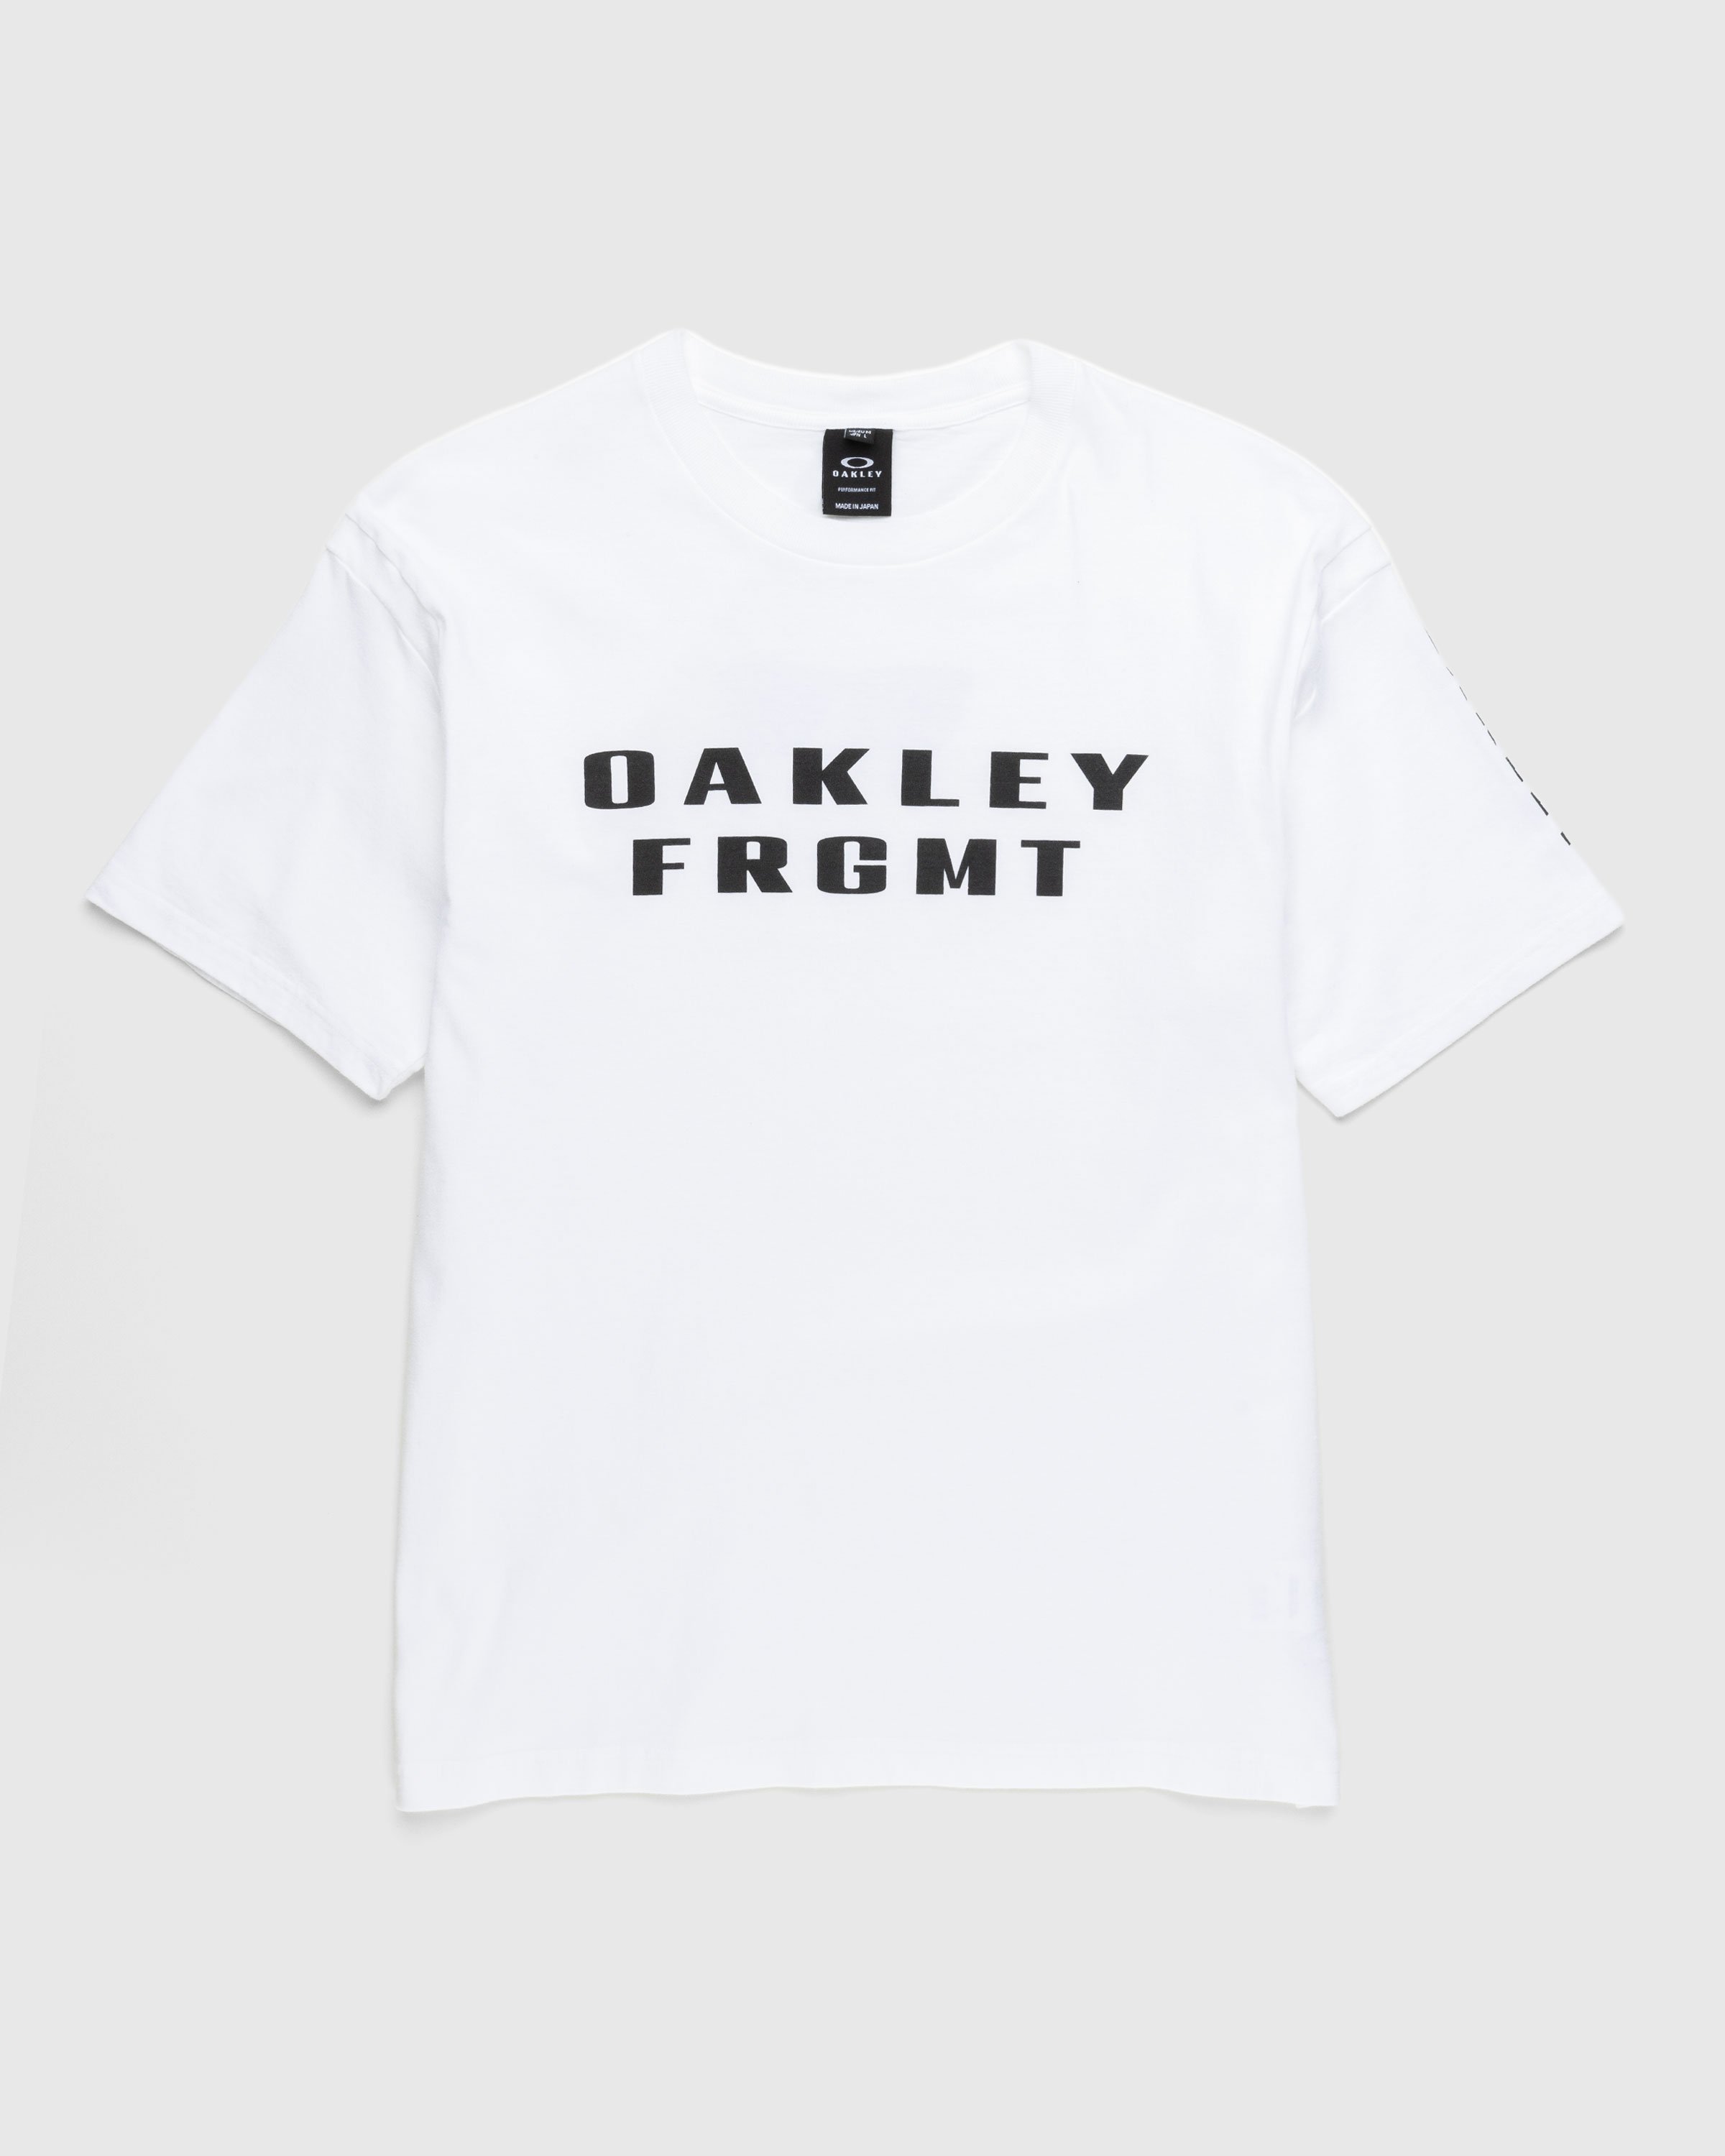 Oakley x Fragment - T-Shirt White - Clothing - White - Image 1